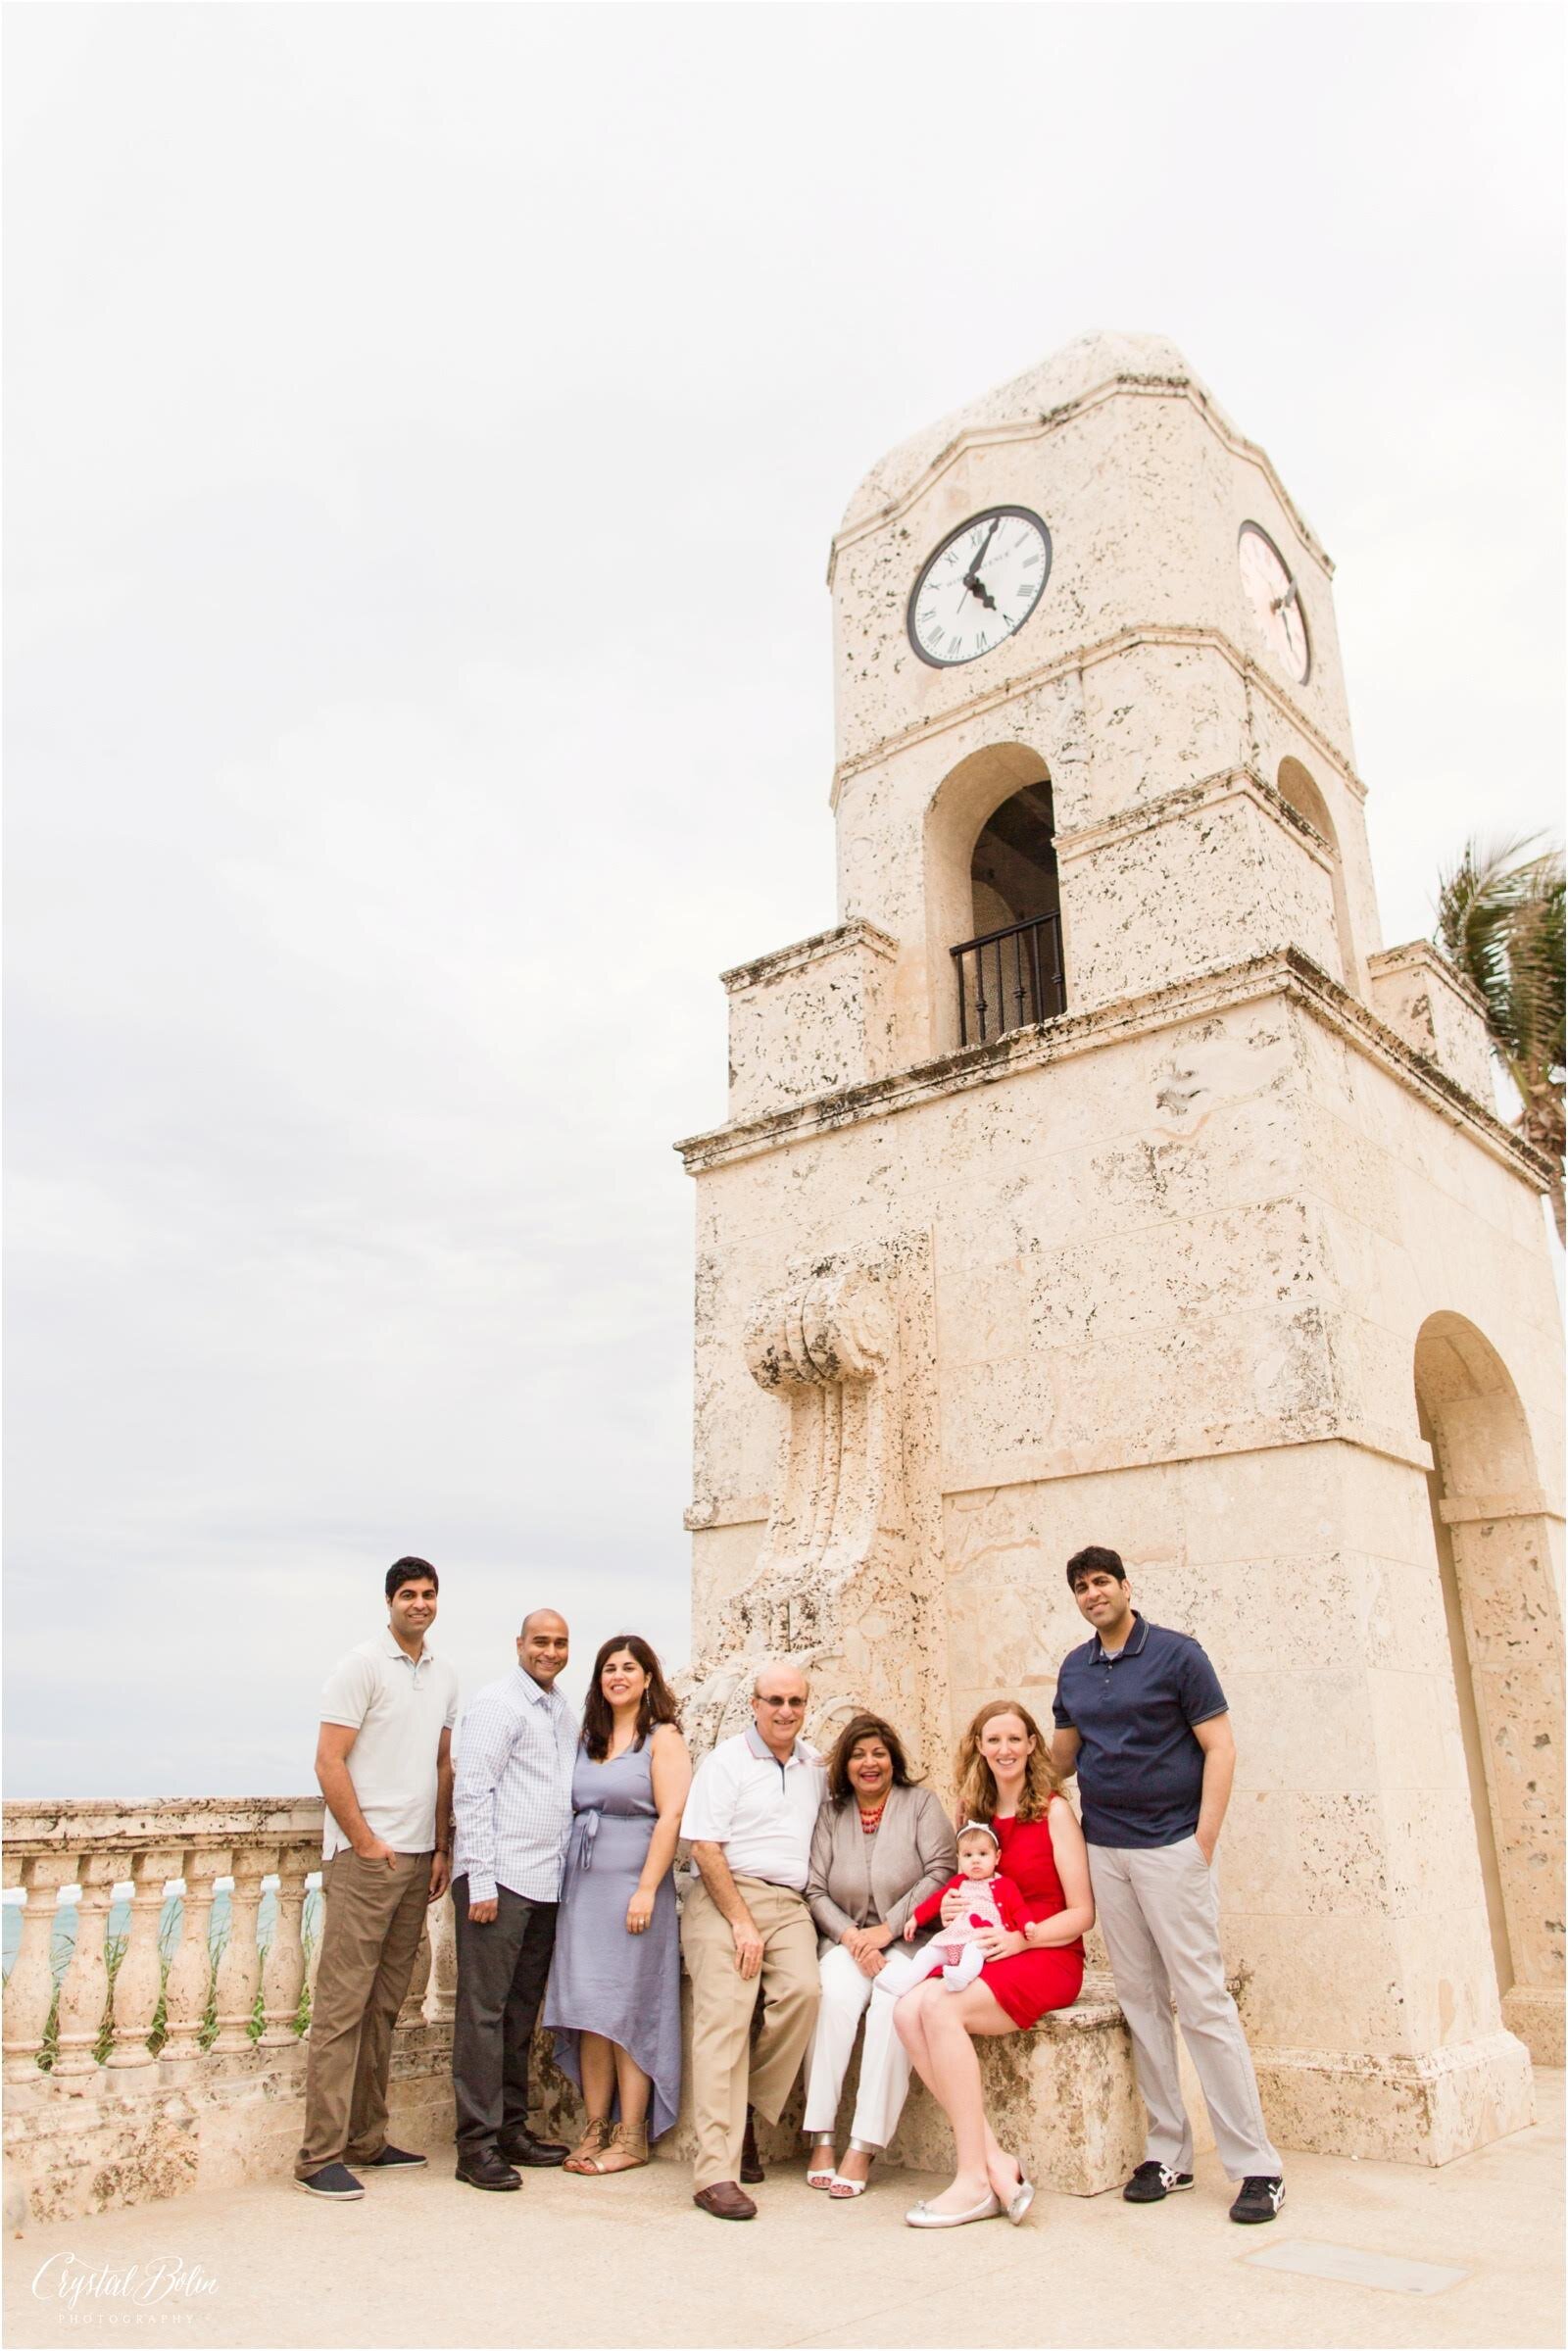 Palm Beach Family Vacation Portraits